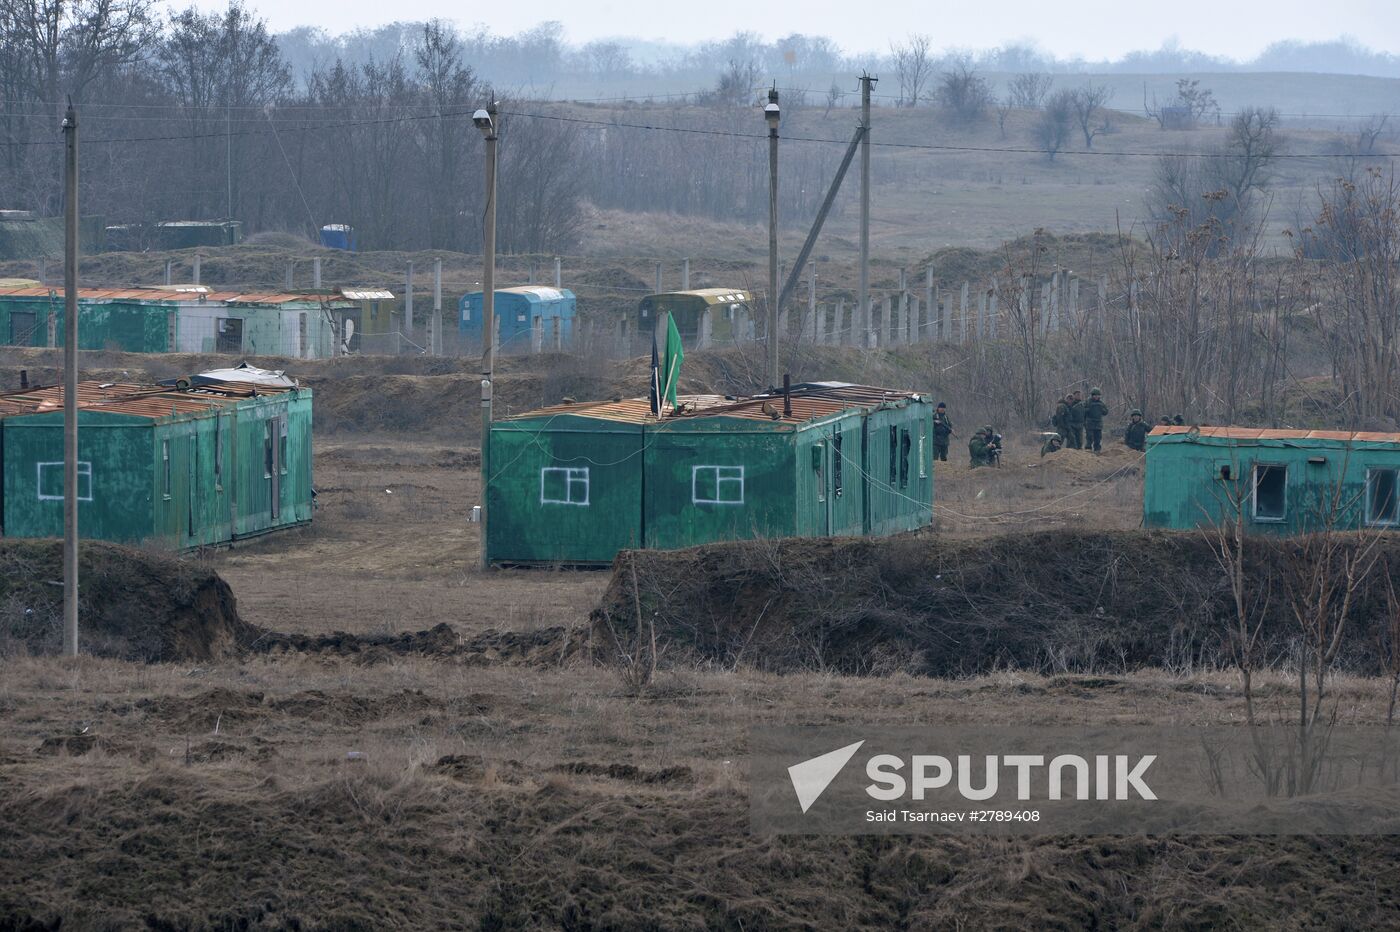 Motorized infantry exercise at Sernovodsky range